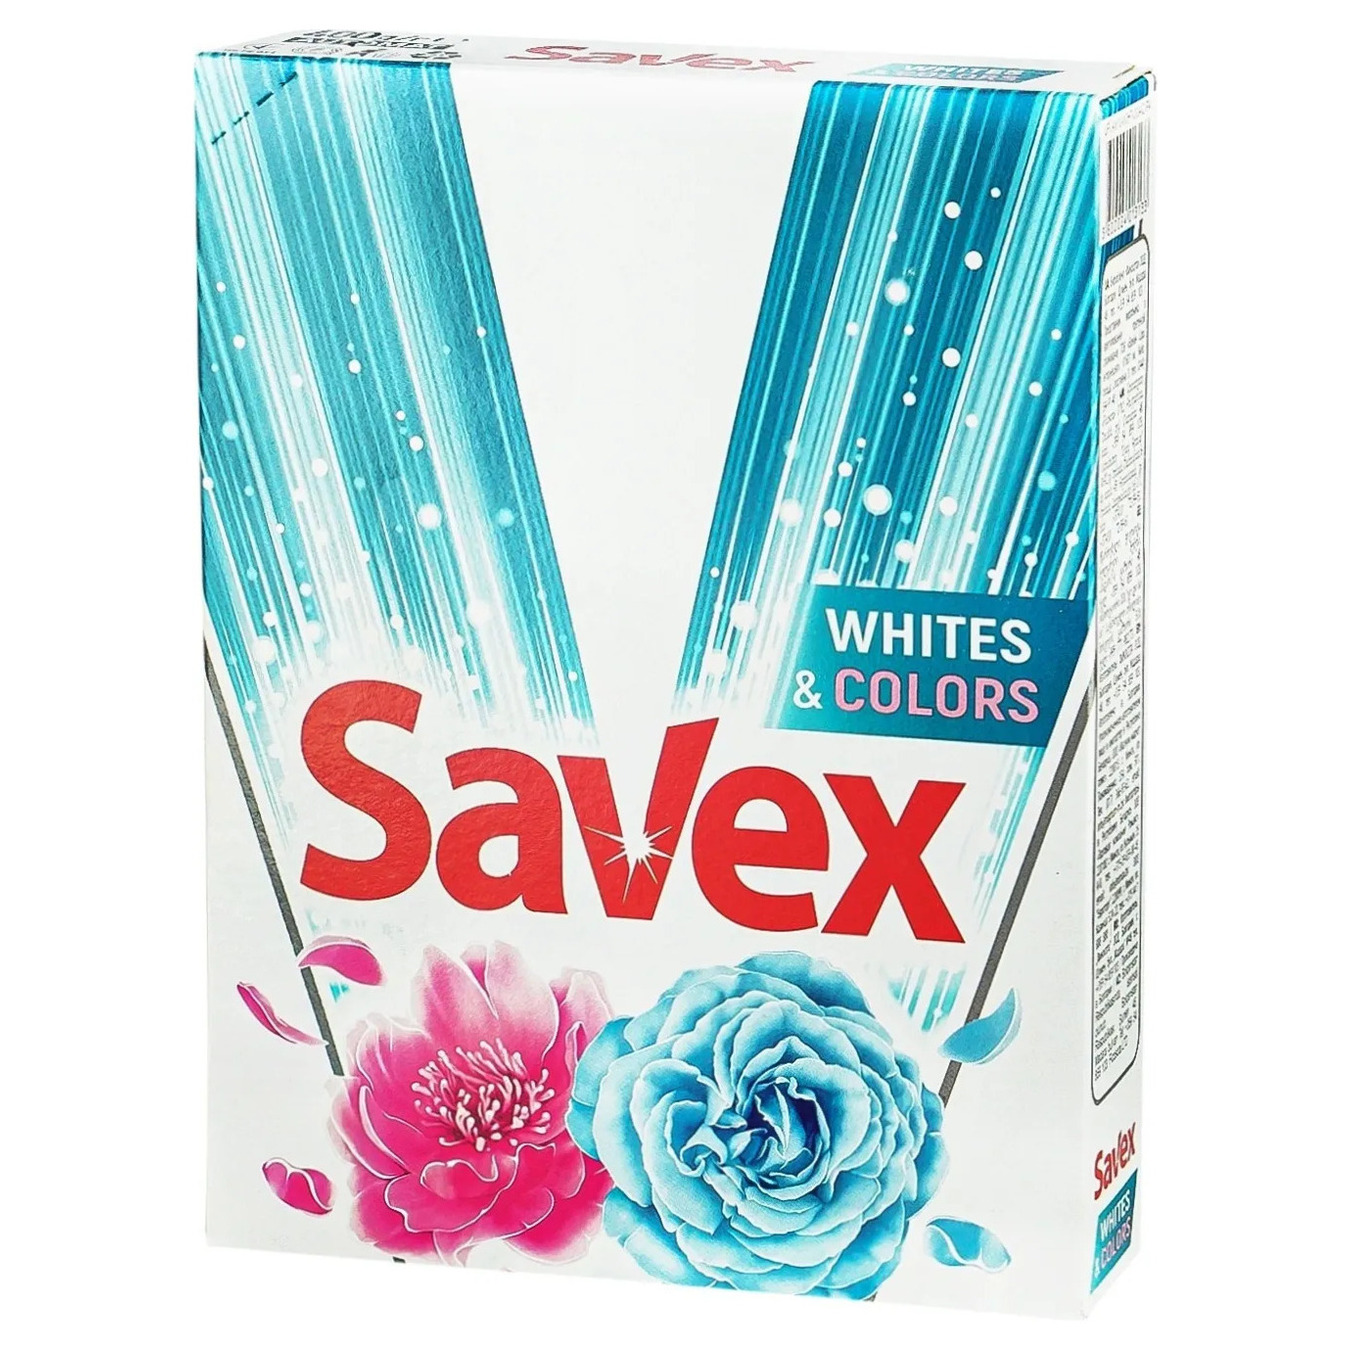 Порошок пральний Savex Whites & Colors автомат 400г